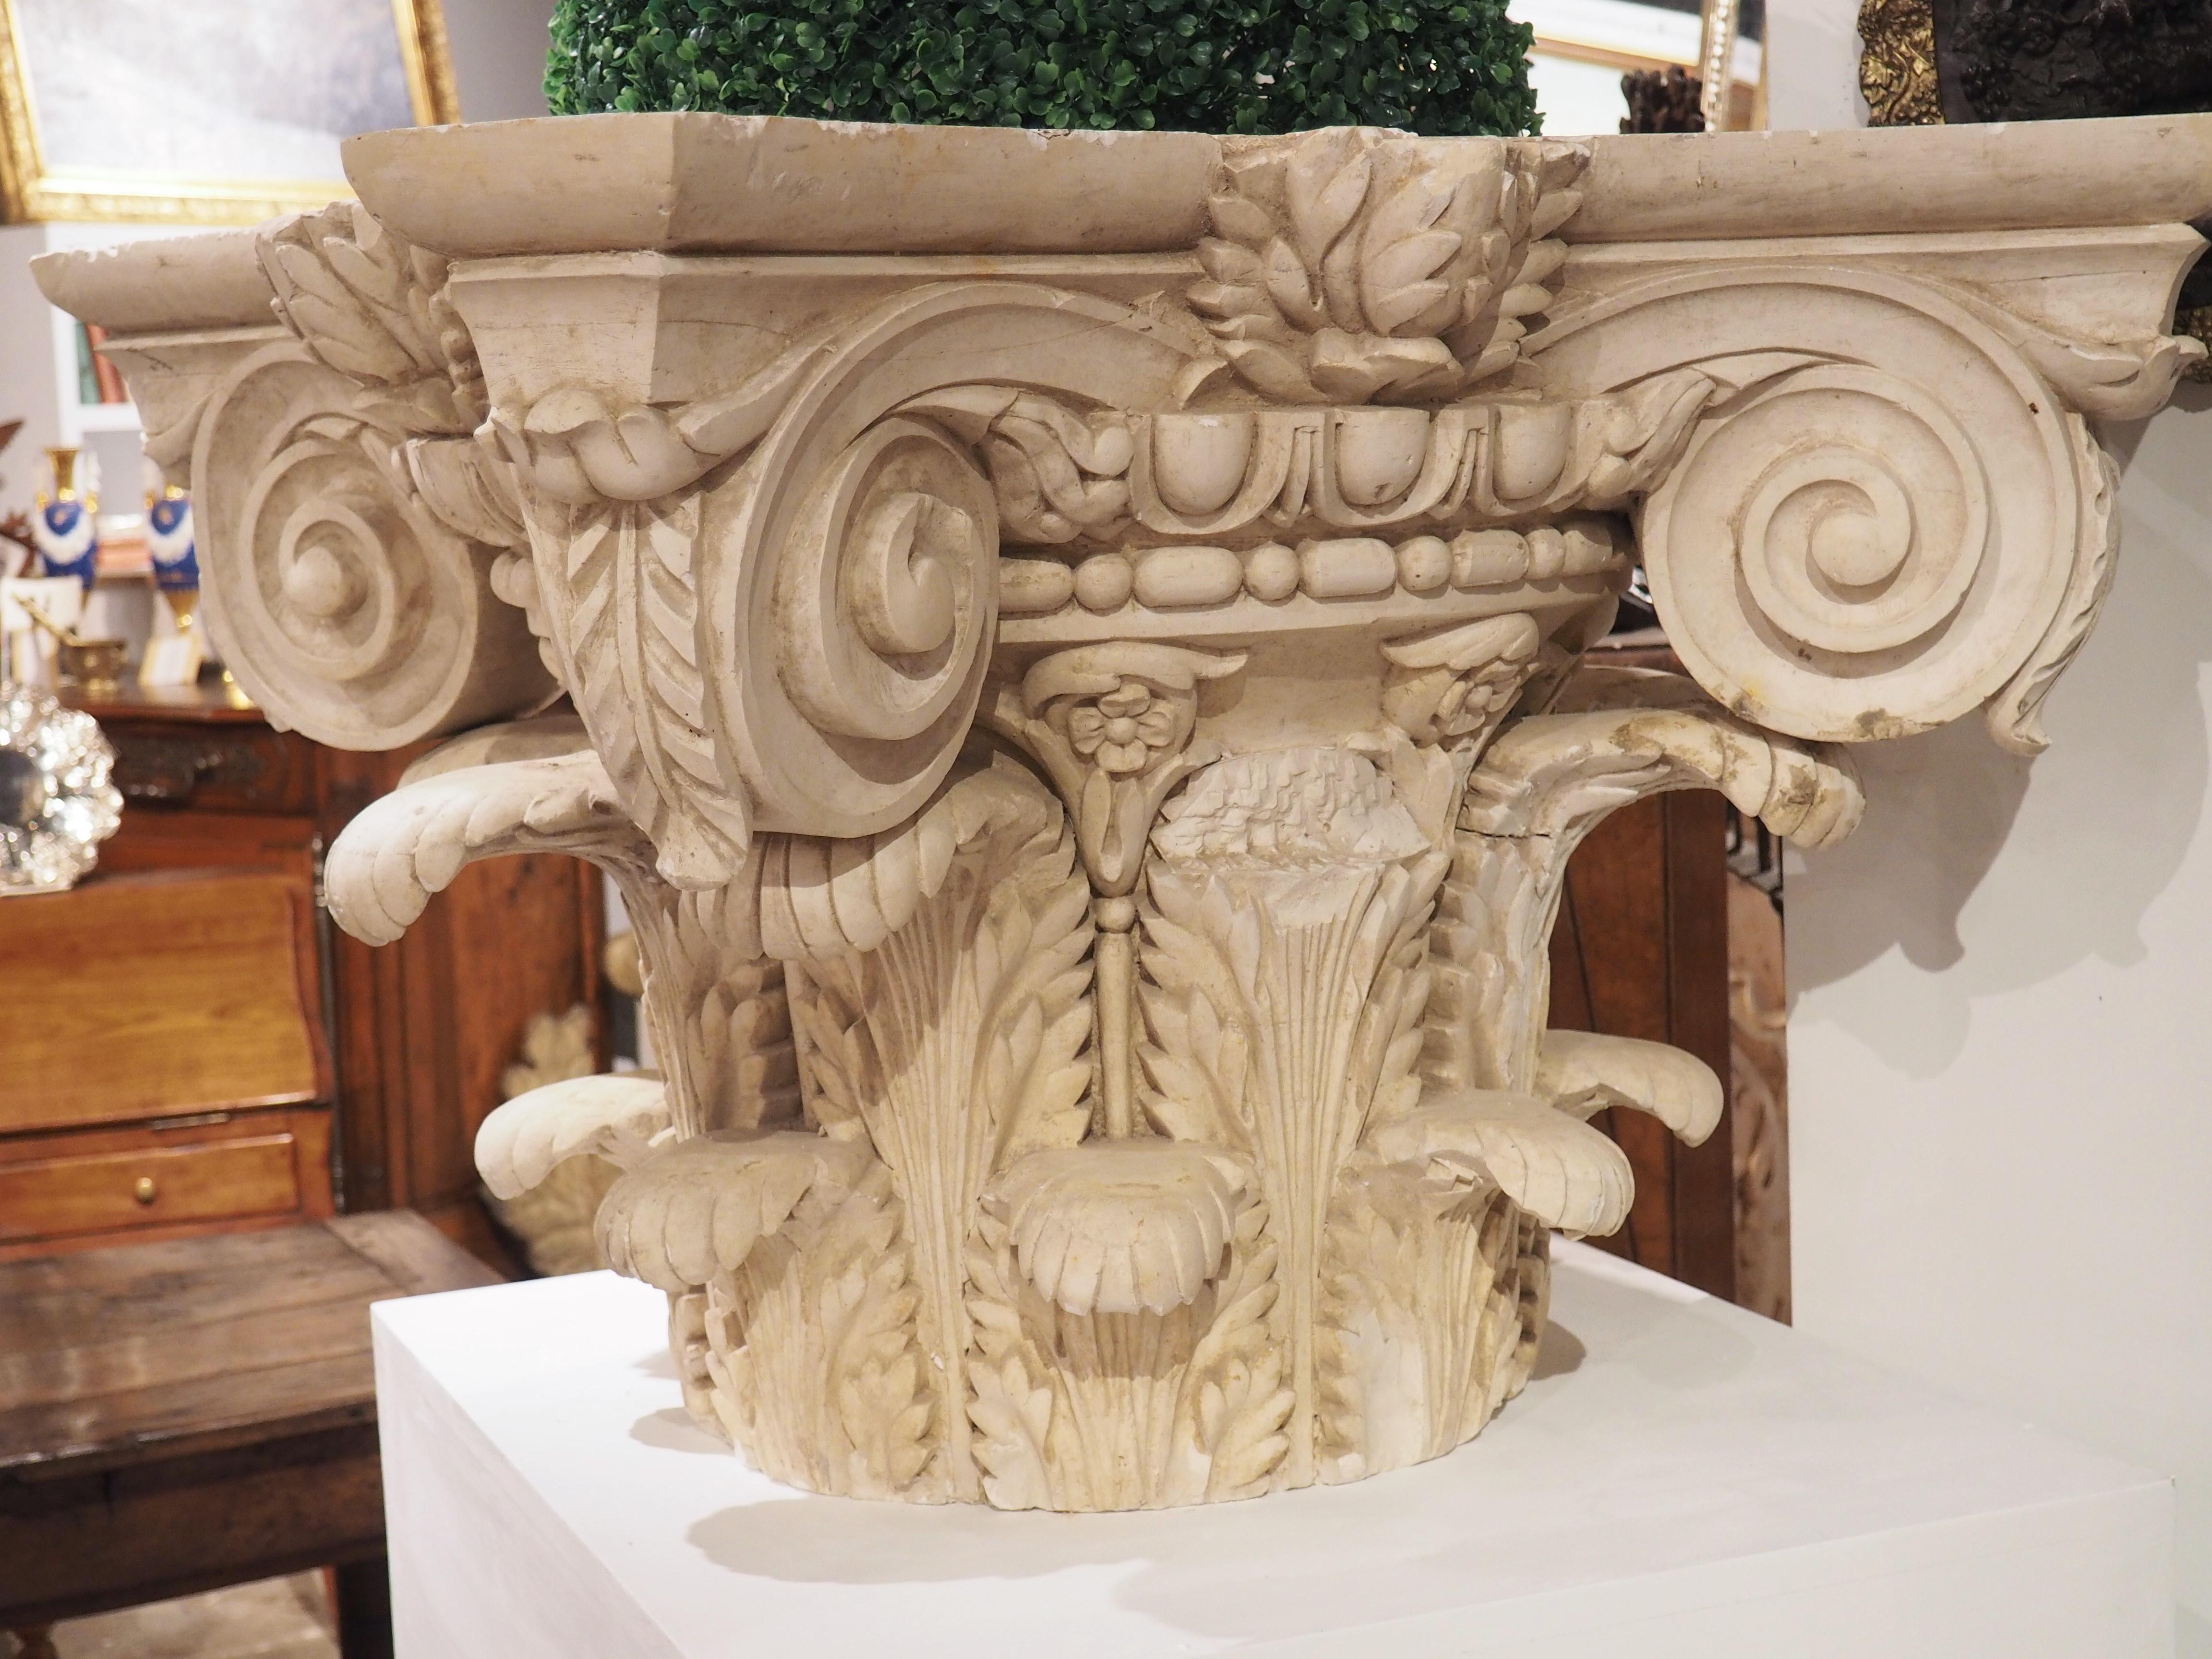 Large Plaster Composite Order Capital on Wooden Pedestal, France, Early 1900s For Sale 3